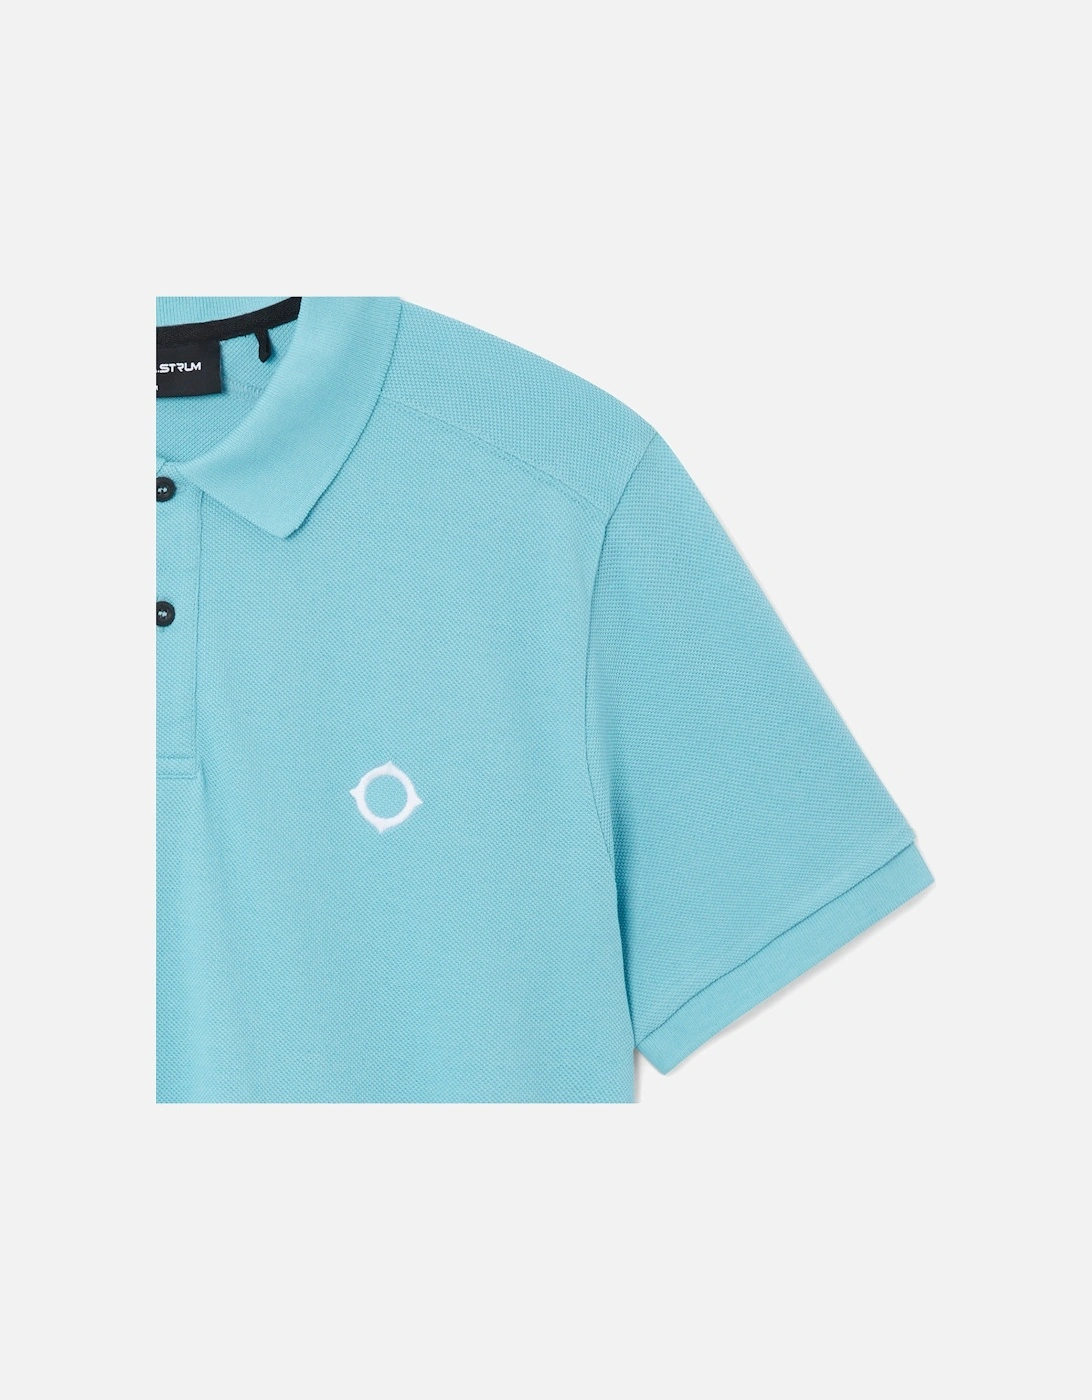 Mens S/S Pique Polo Shirt (Sea Blue)